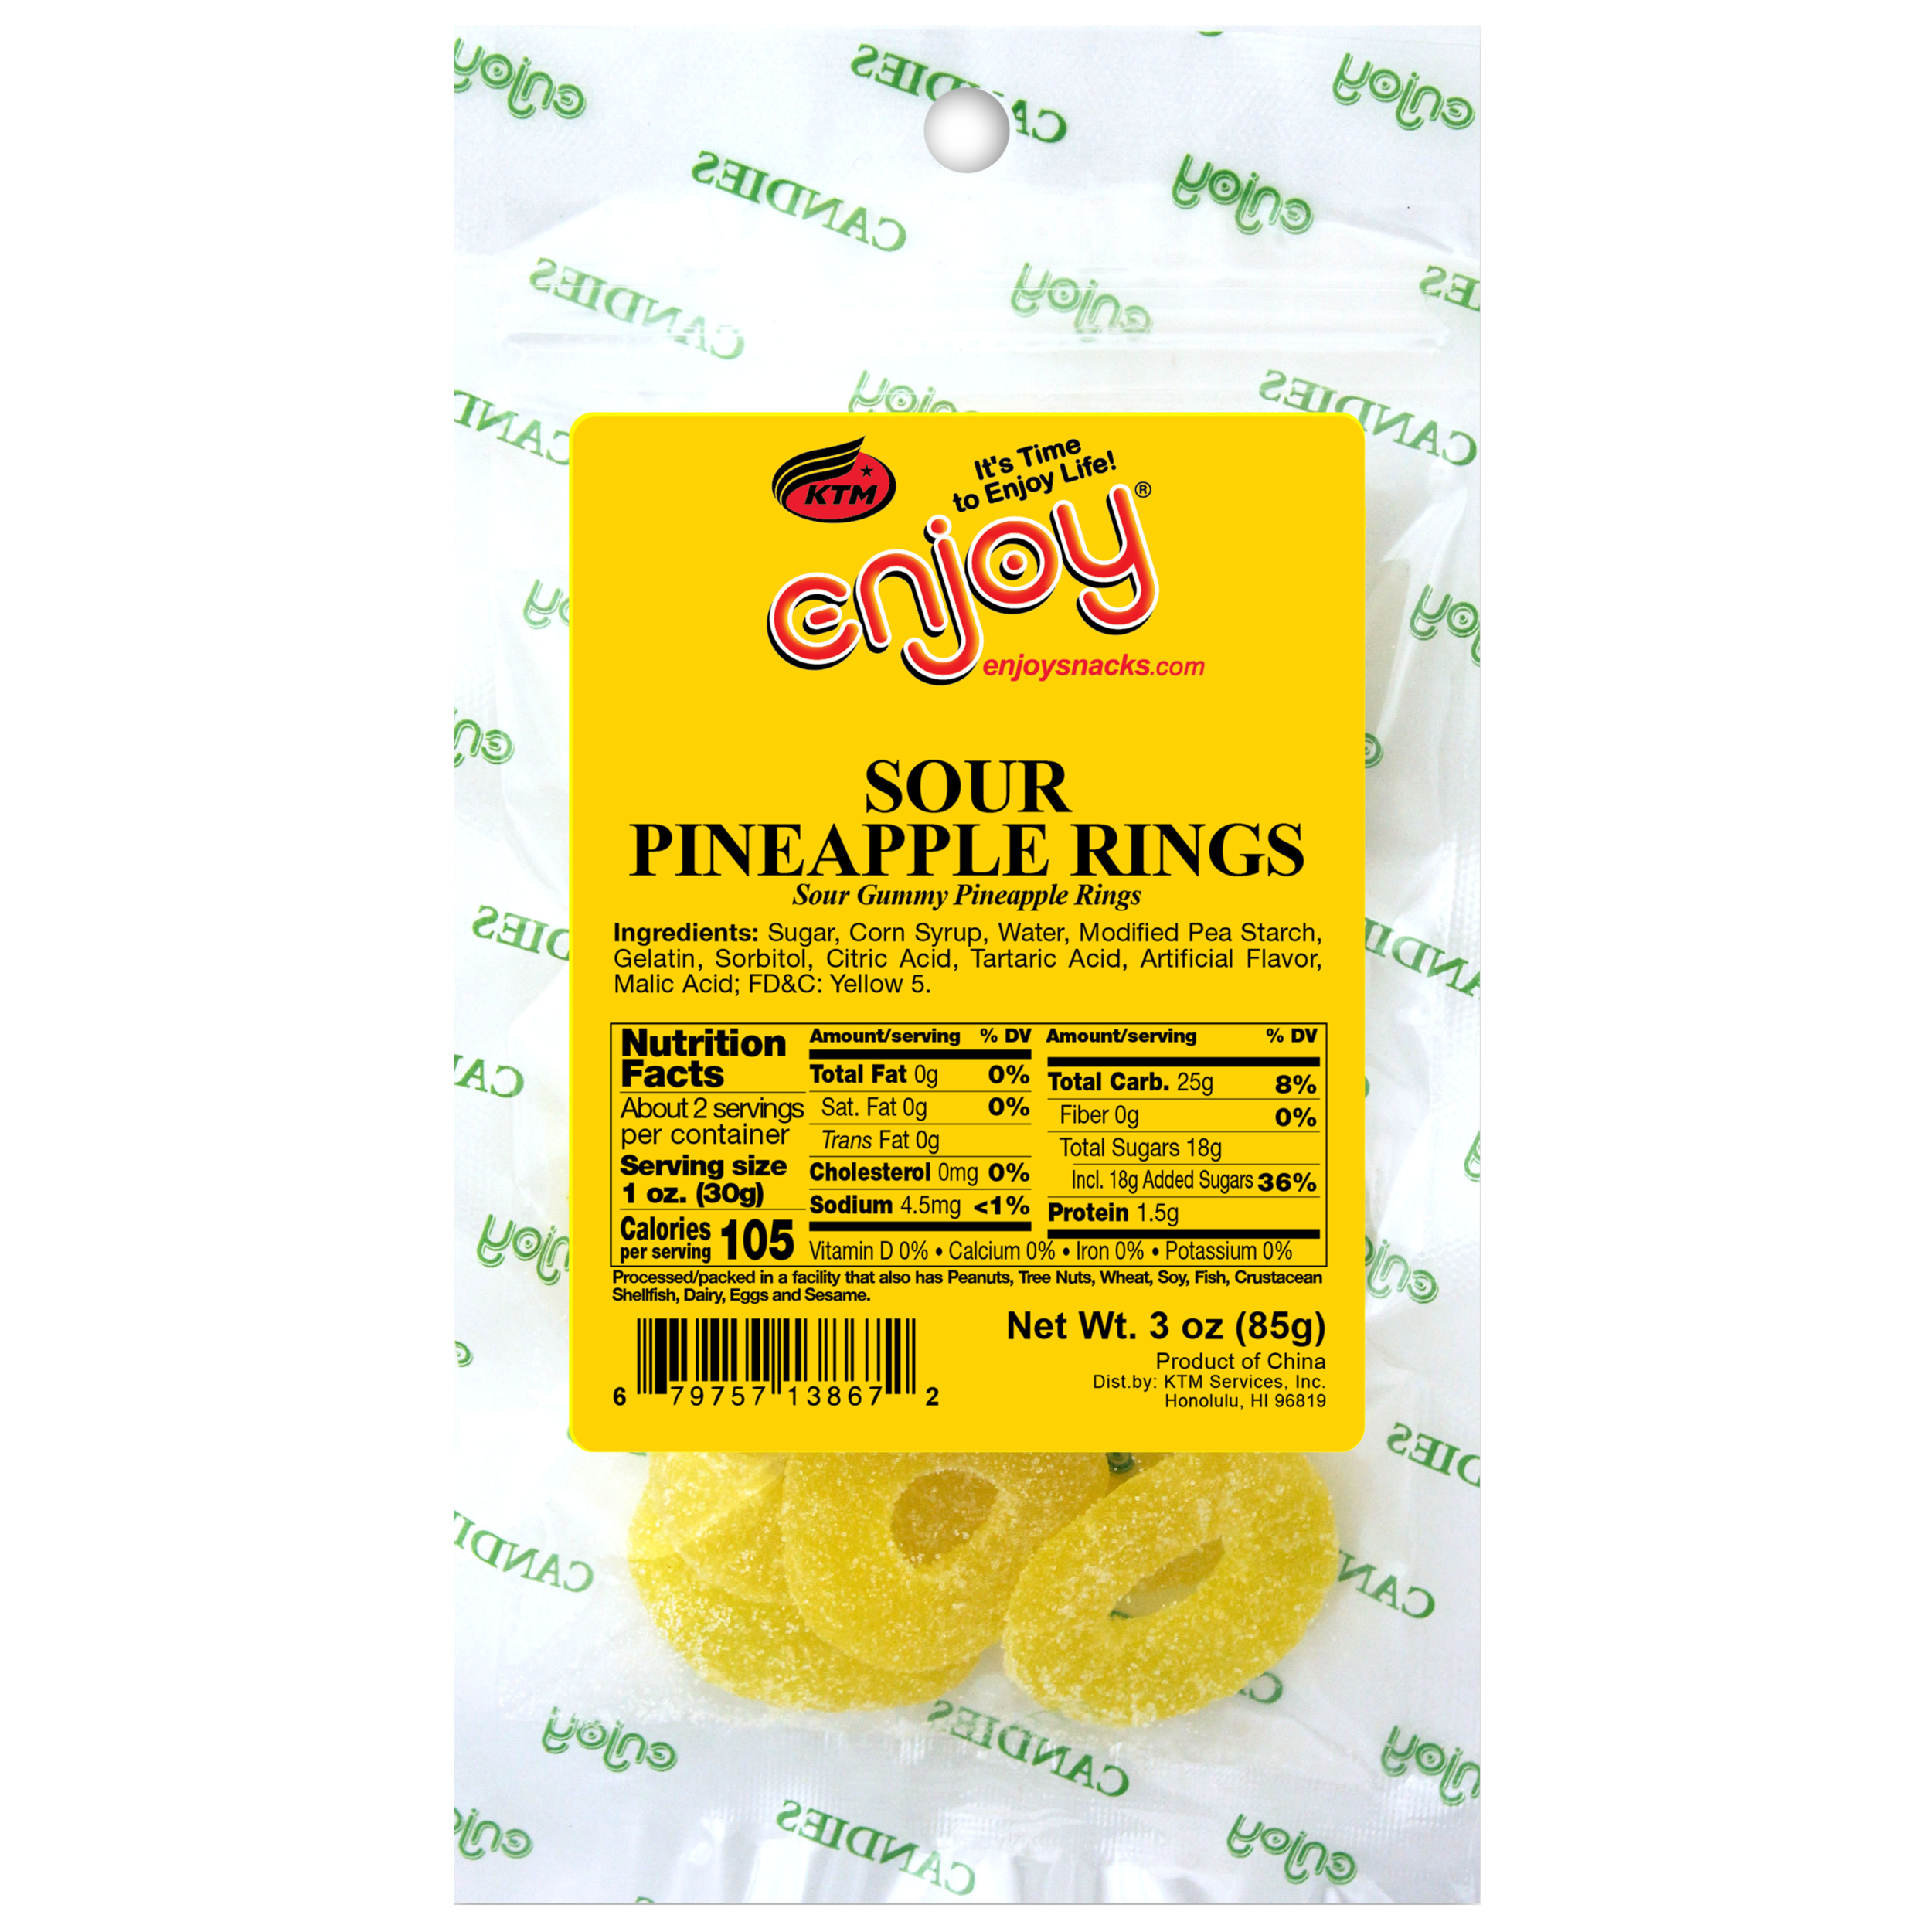 Enjoy Gummy, XD, Pineapple Flavor, Fun Packs - 50 packs, 14.12 oz